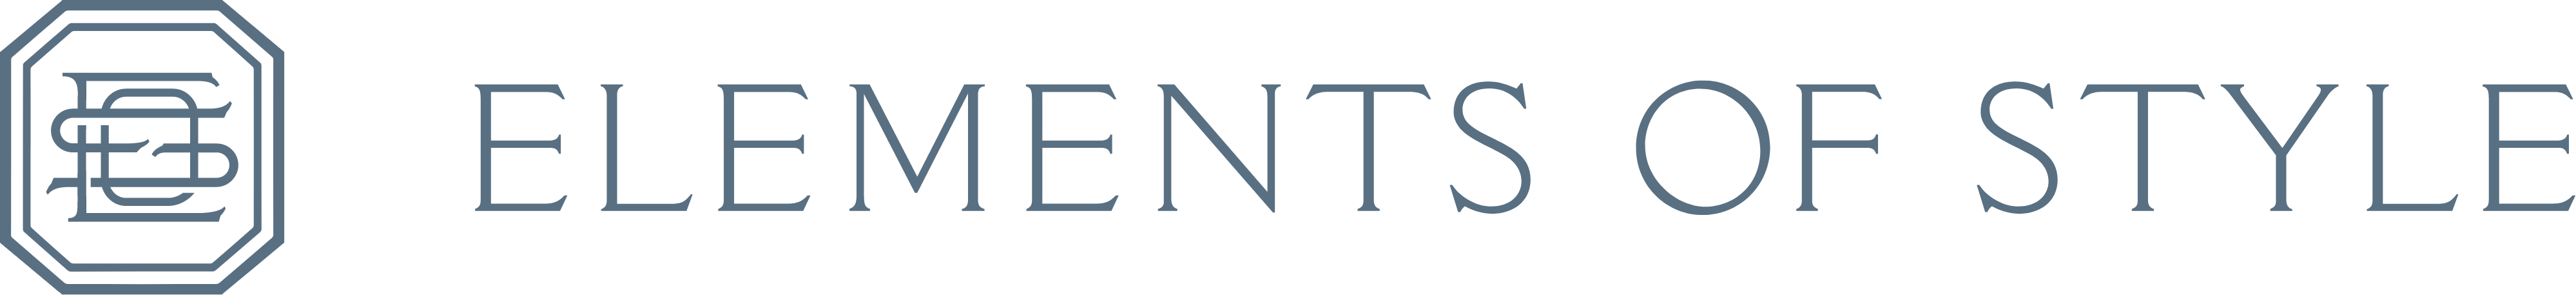 erin gates design logo